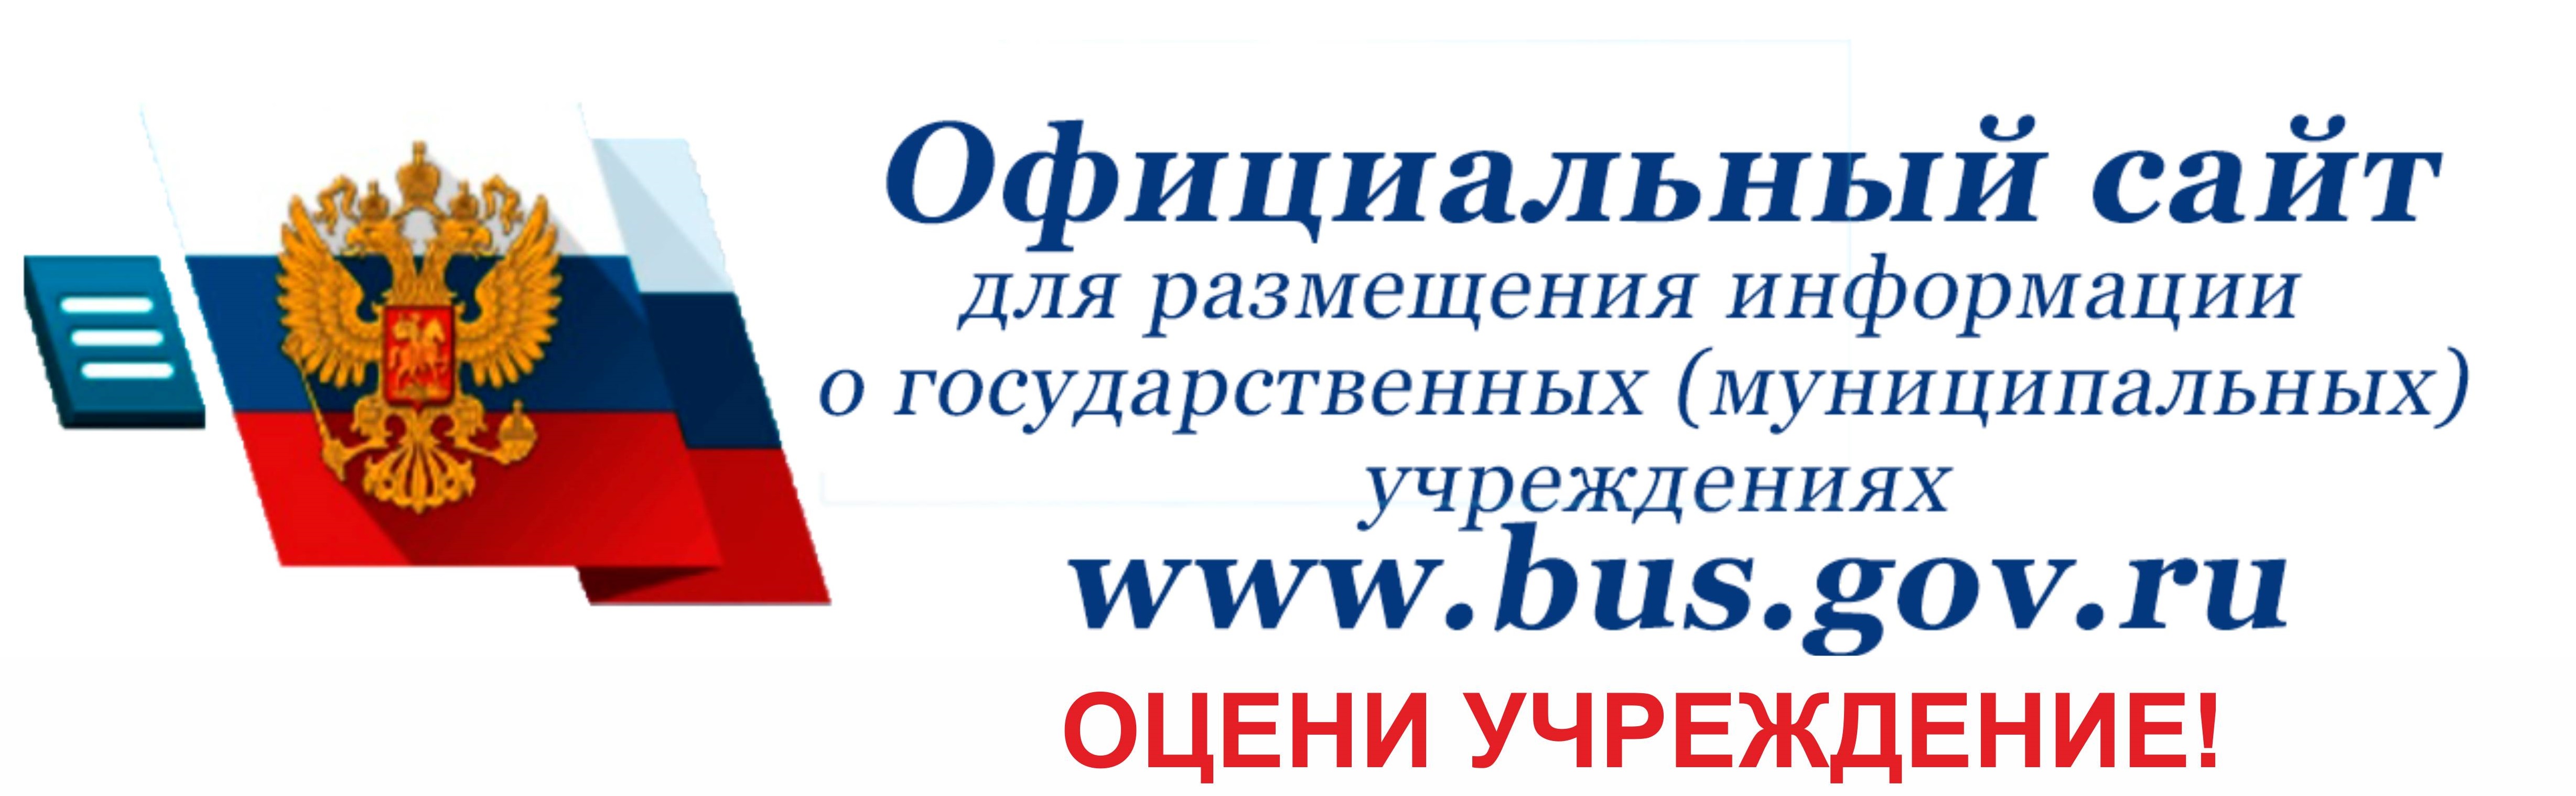 Https khv gov ru. Бас гов. Bus.gov.ru баннер. Bus.gov.ru логотип. Bus gov баннер.